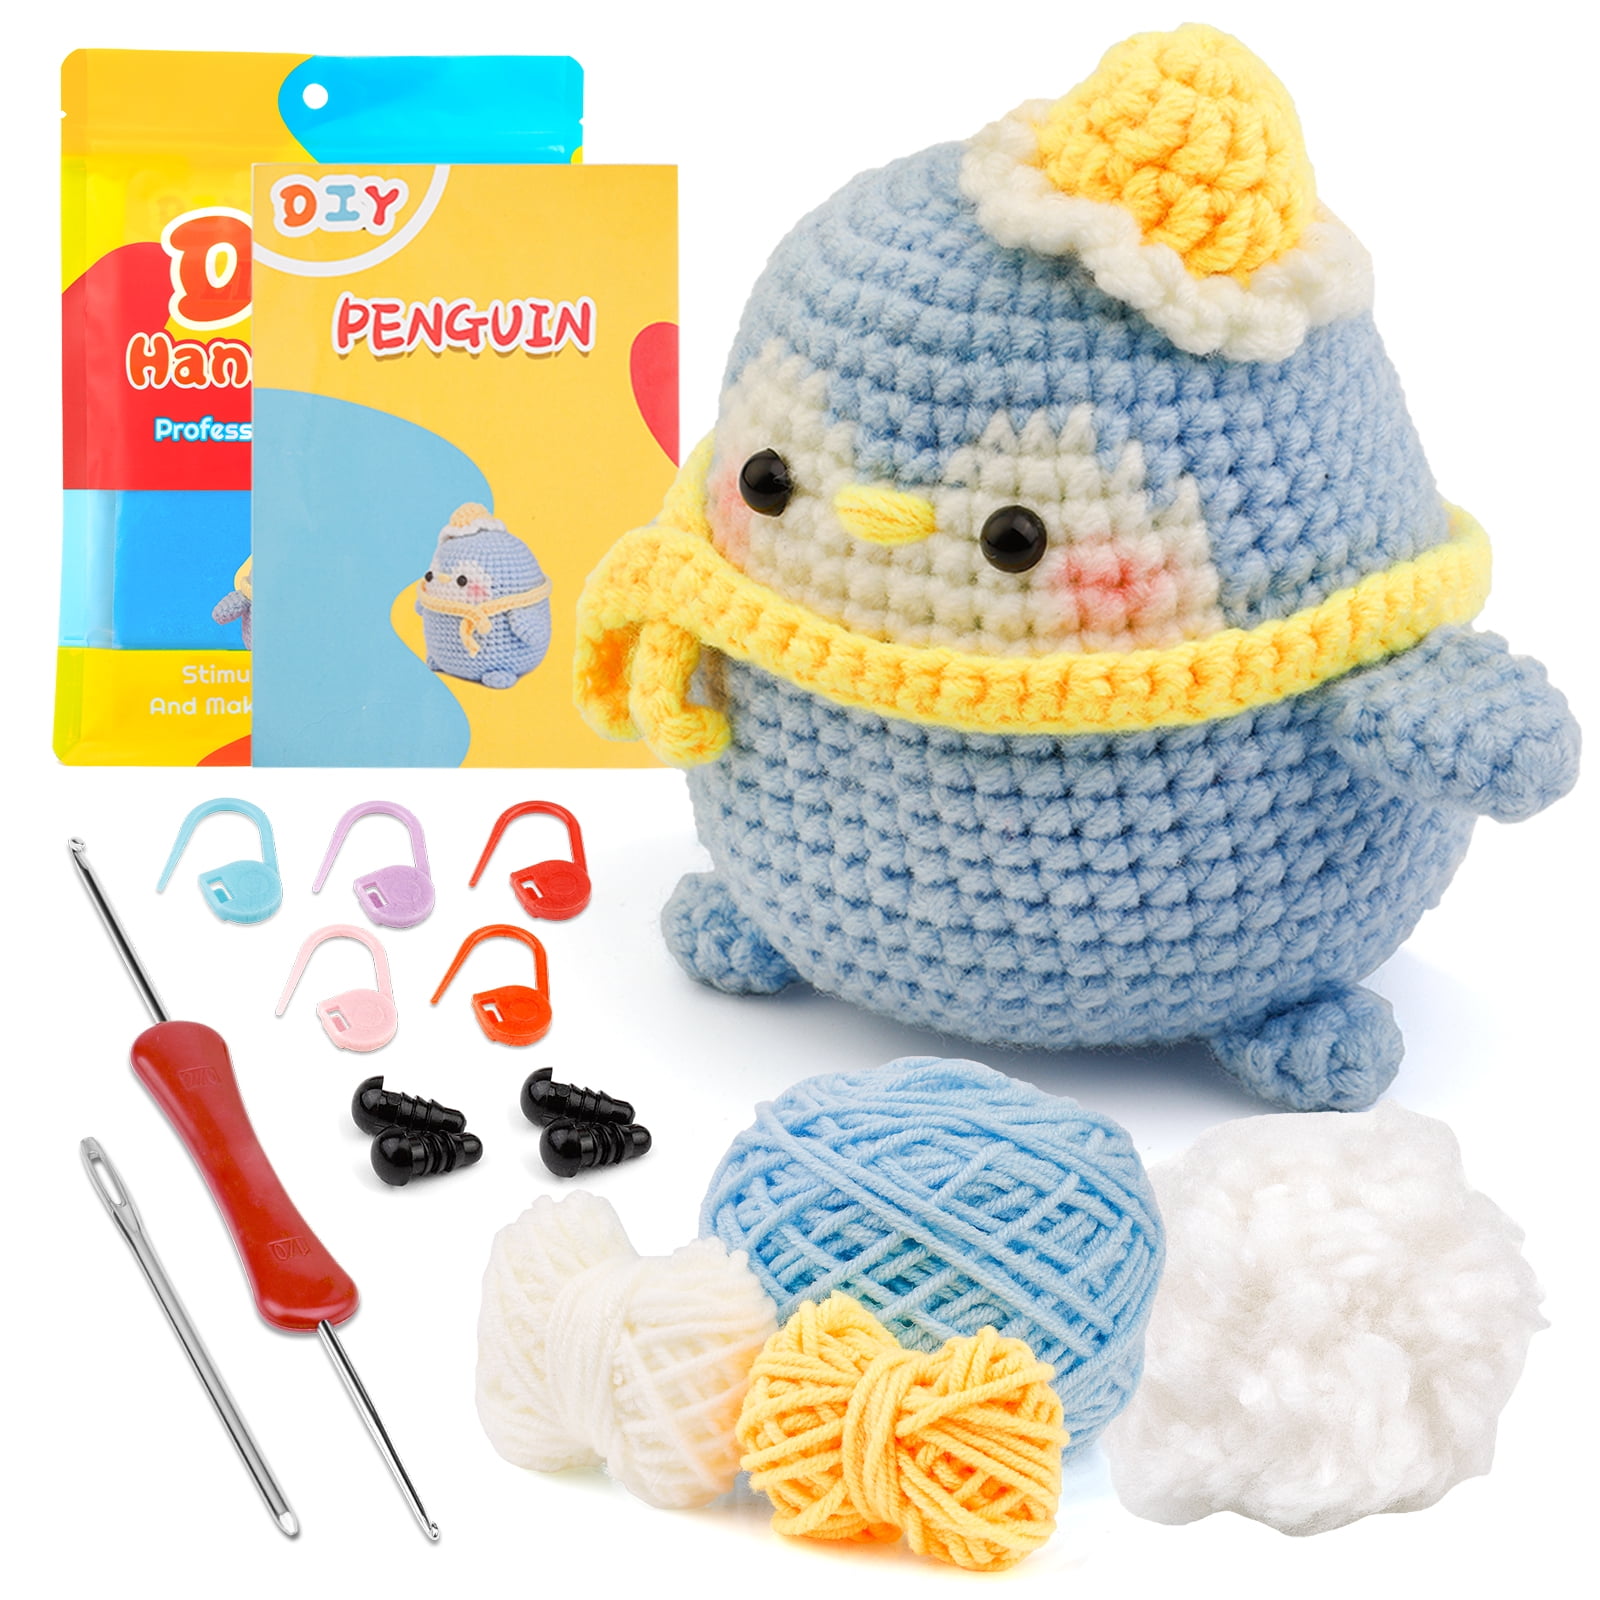 Beginners Crochet Kit, Cute Small Animals Kit for Beginers and Experts, All  in One Crochet Knitting Kit, Step-by-Step Instructions Video, Crochet  Starter Kit for Beginner DIY Craft Art (Penguin). 